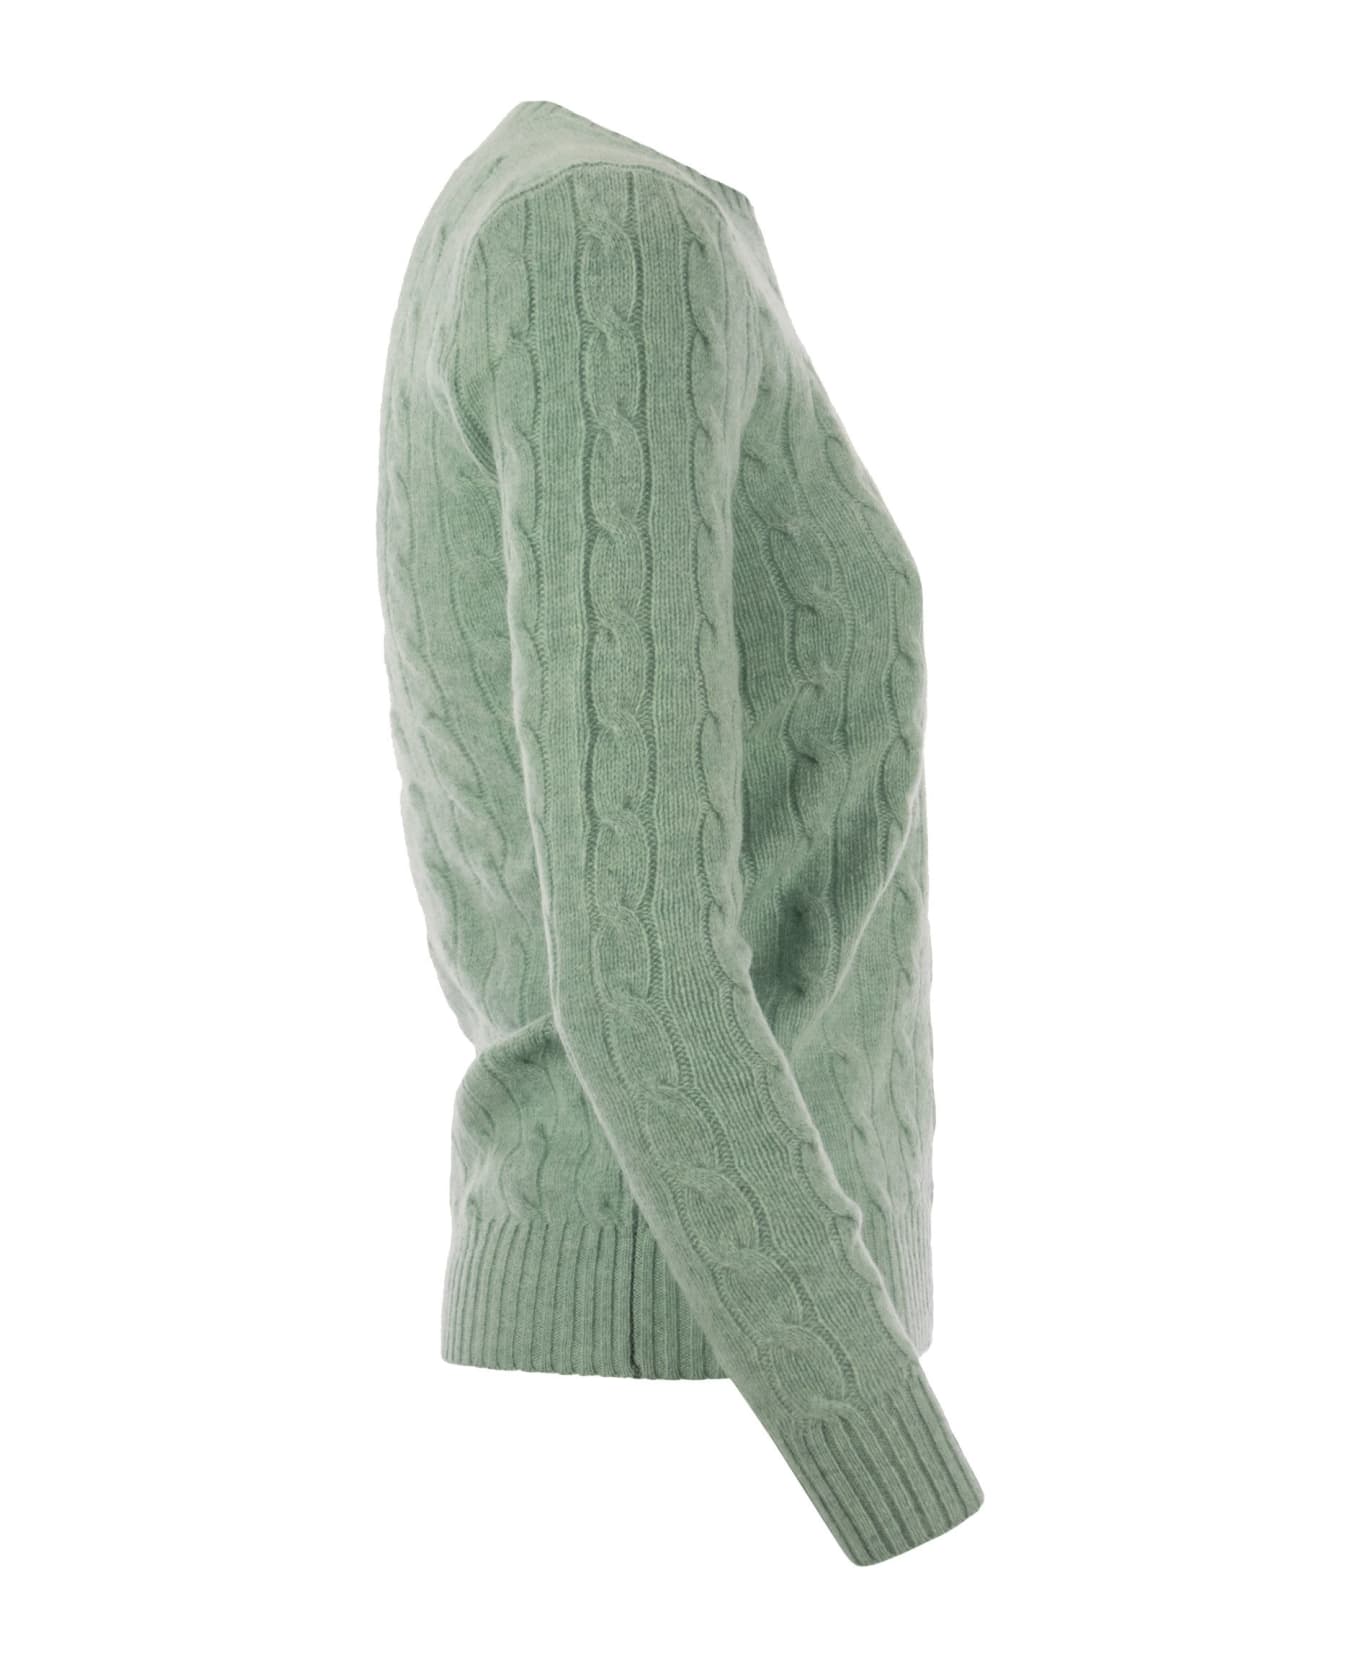 Polo Ralph Lauren April Melange Green Wool And Cashmere Braided Sweater - Green ニットウェア